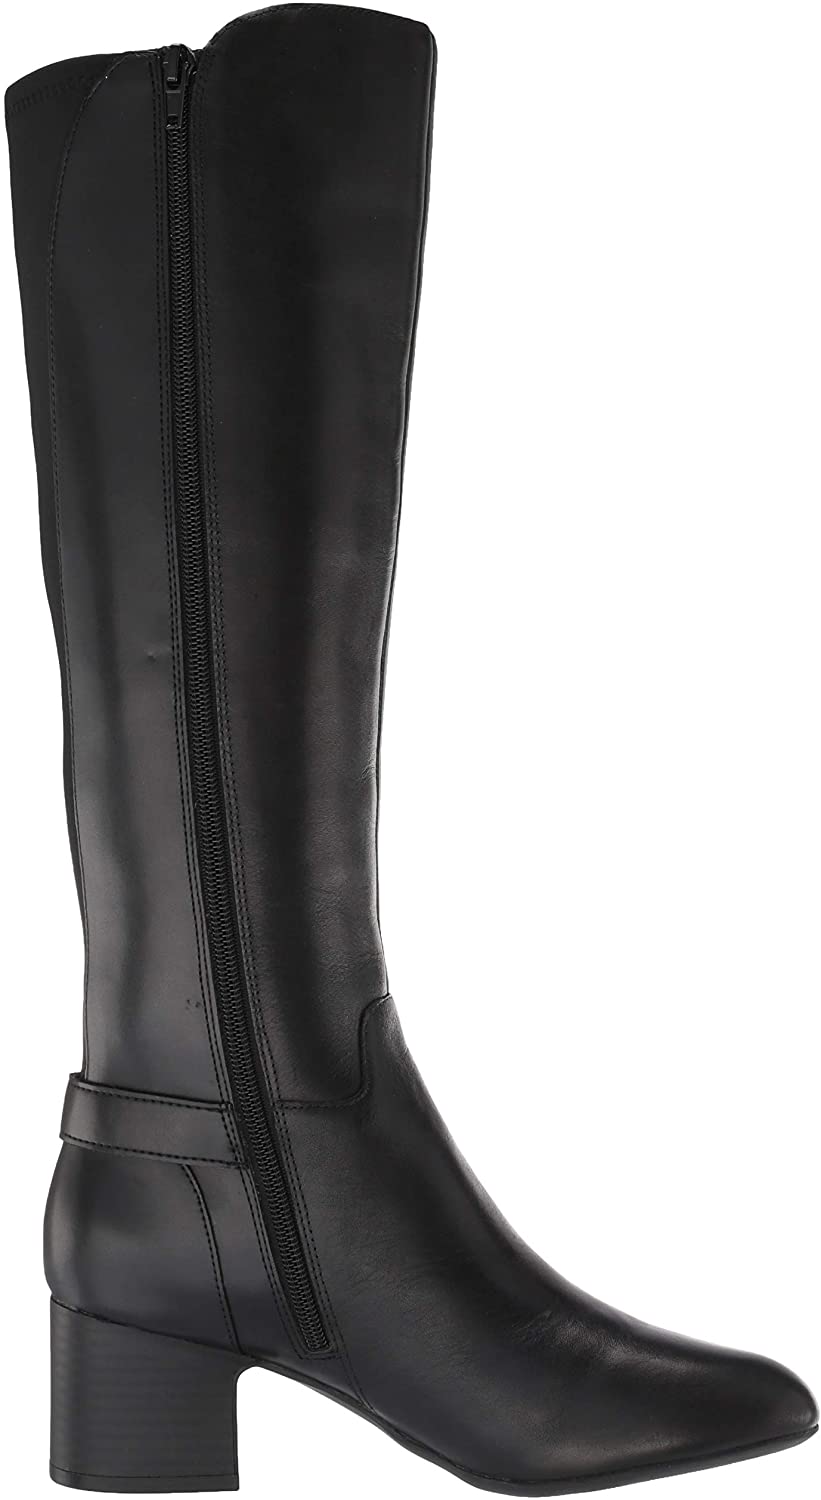 Anne Klein Women's Honesty Boot Ankle, Black Leather, Size 10.0 TFQs | eBay